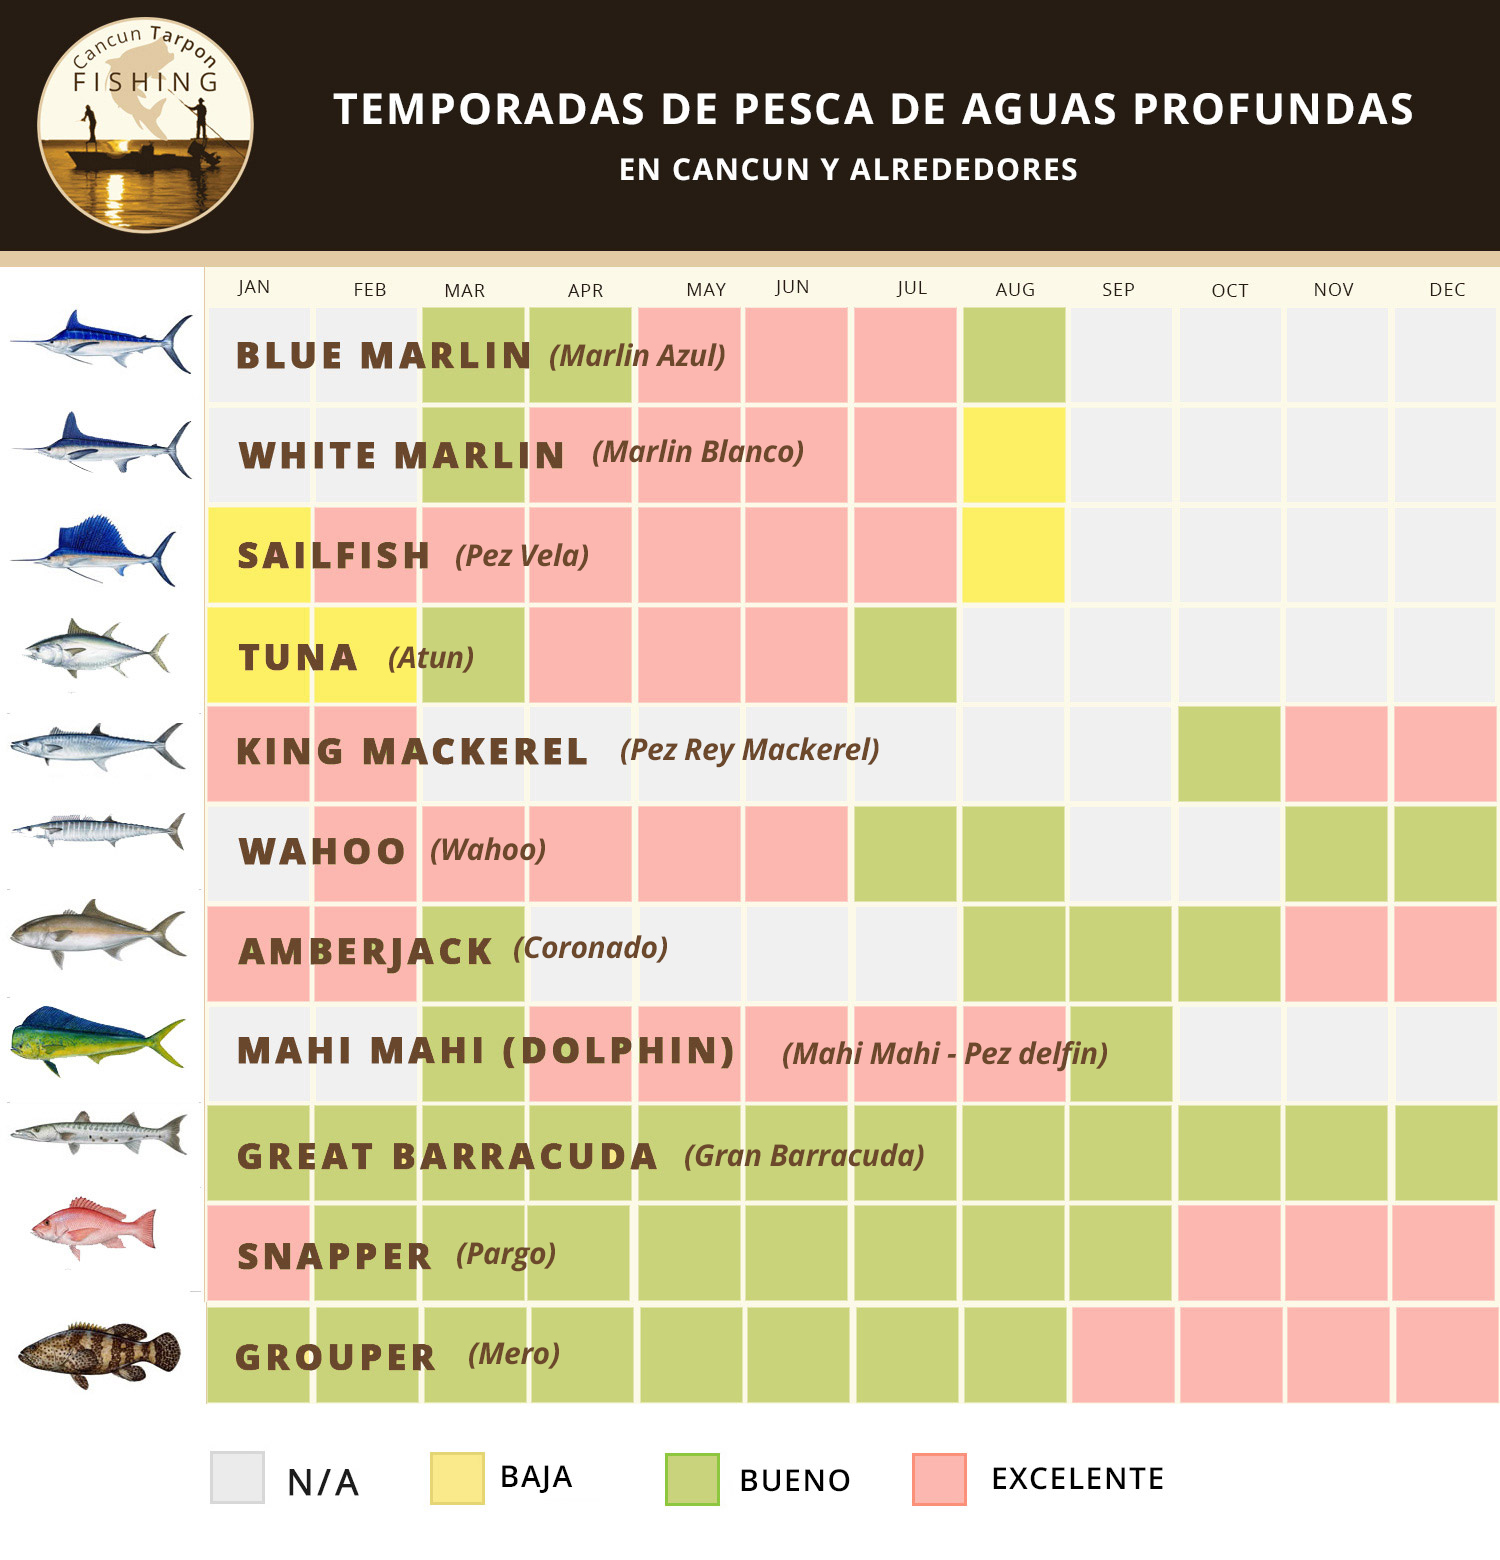 Cancun deep sea fishing calendar